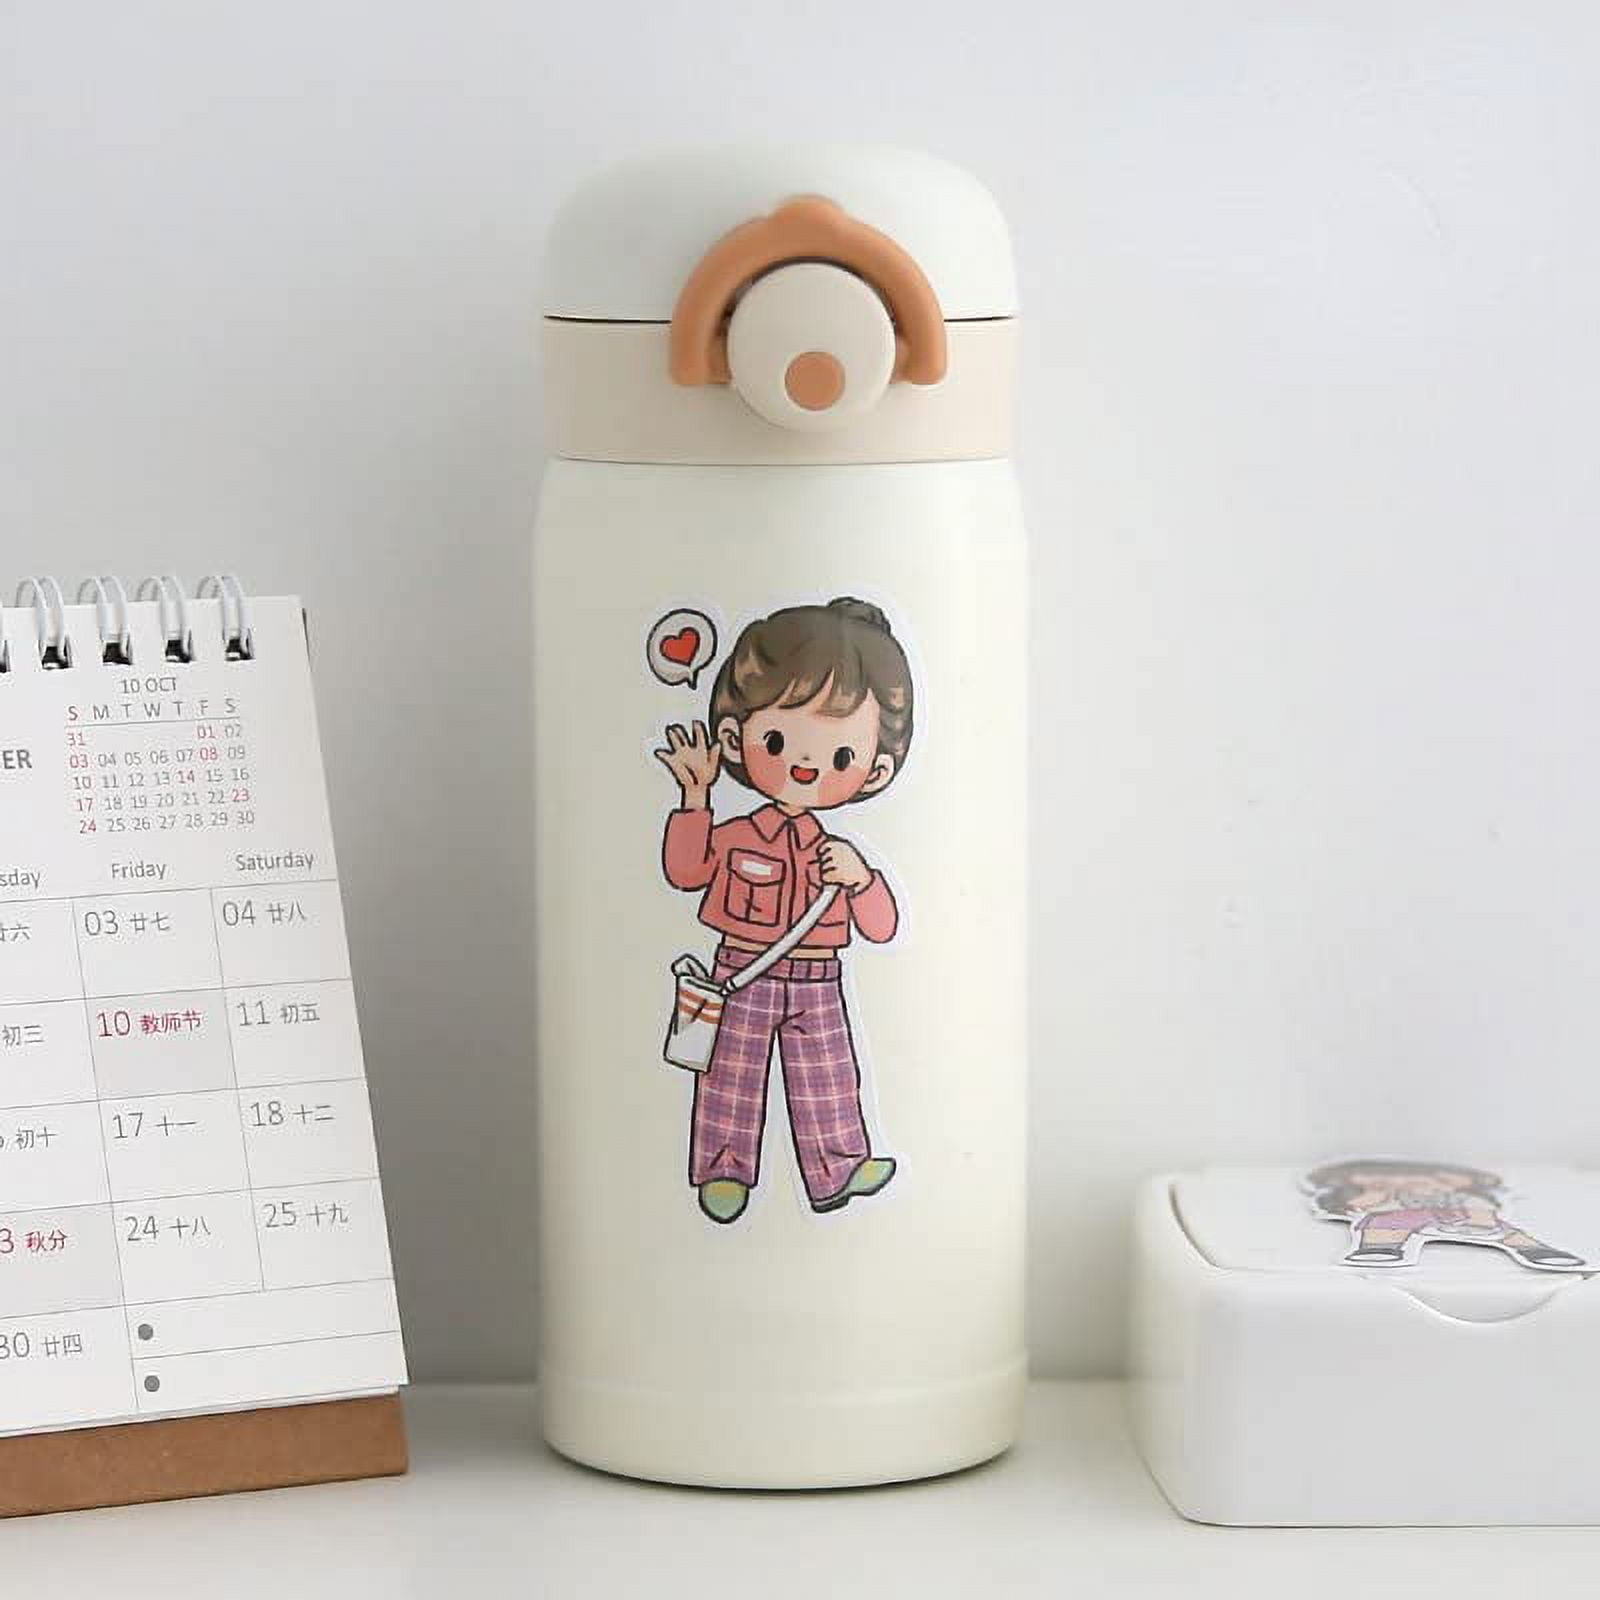 DanceeMangoos 50 Sheets Kawaii Washi Stickers, Cute Cartoon Printed  Adhesive Label Decorative Sticker for Scrapbooking Diary Journaling Planner  DIY